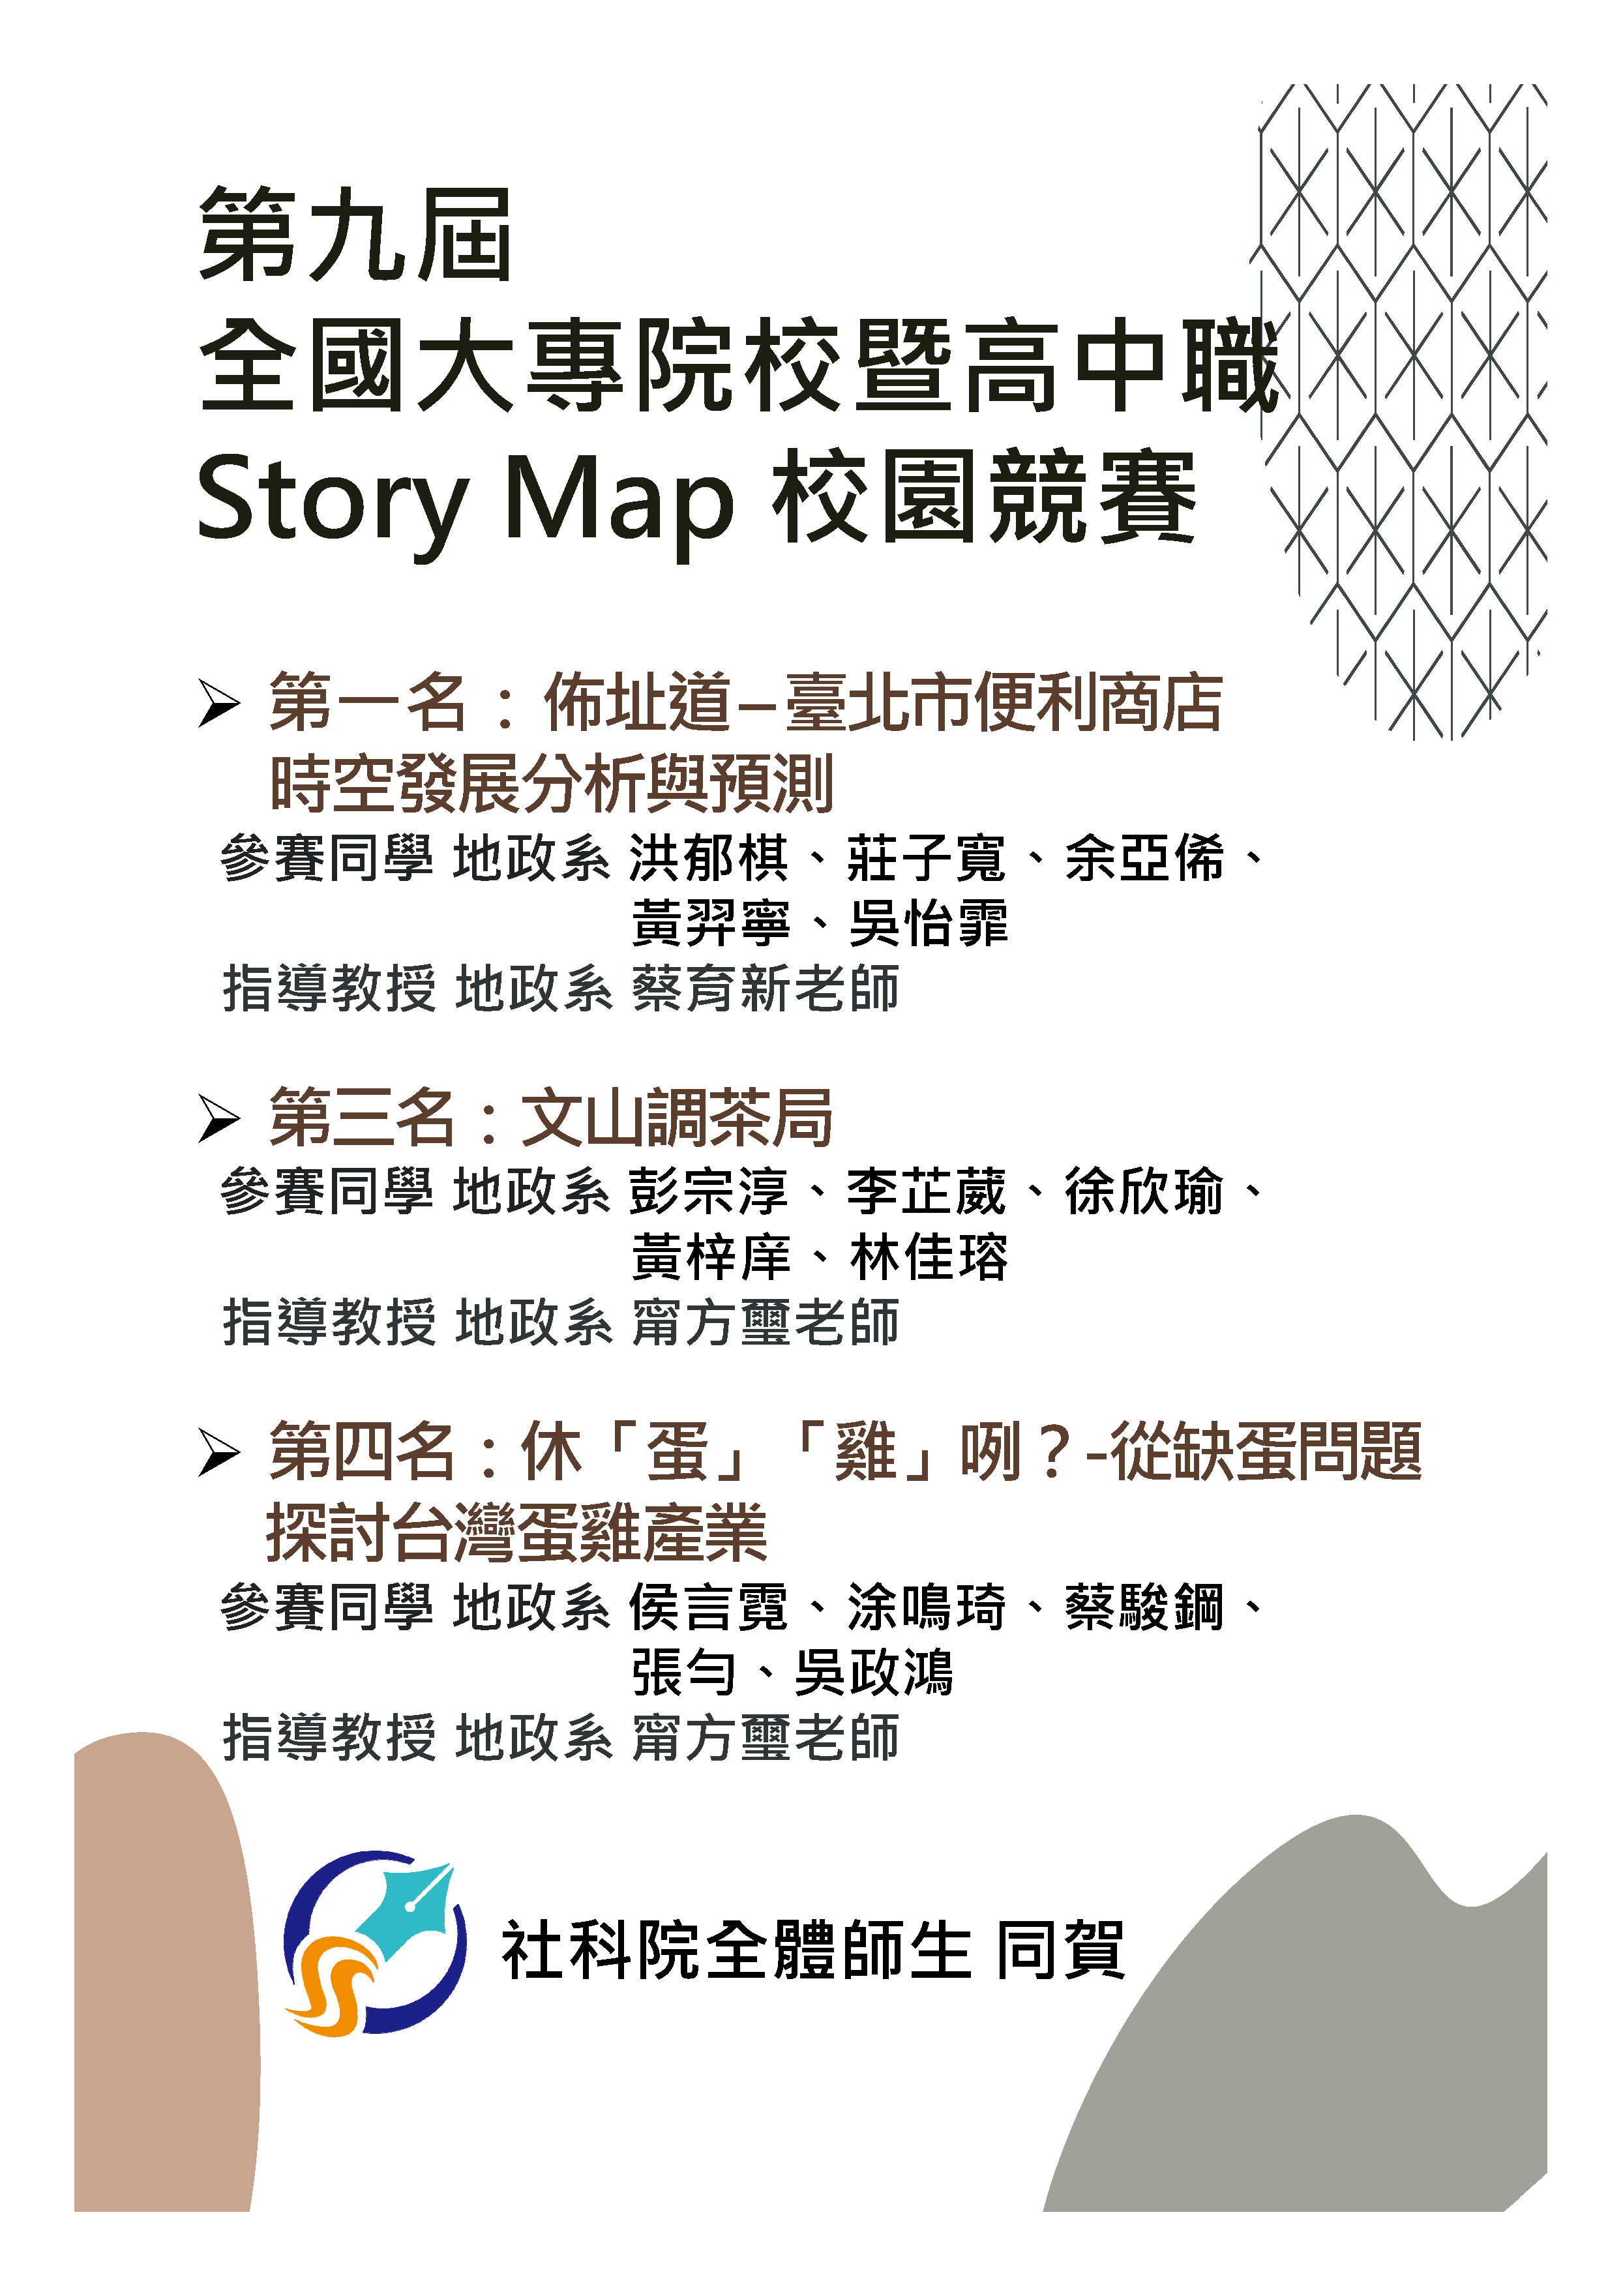 9th大專校園story map競賽得獎